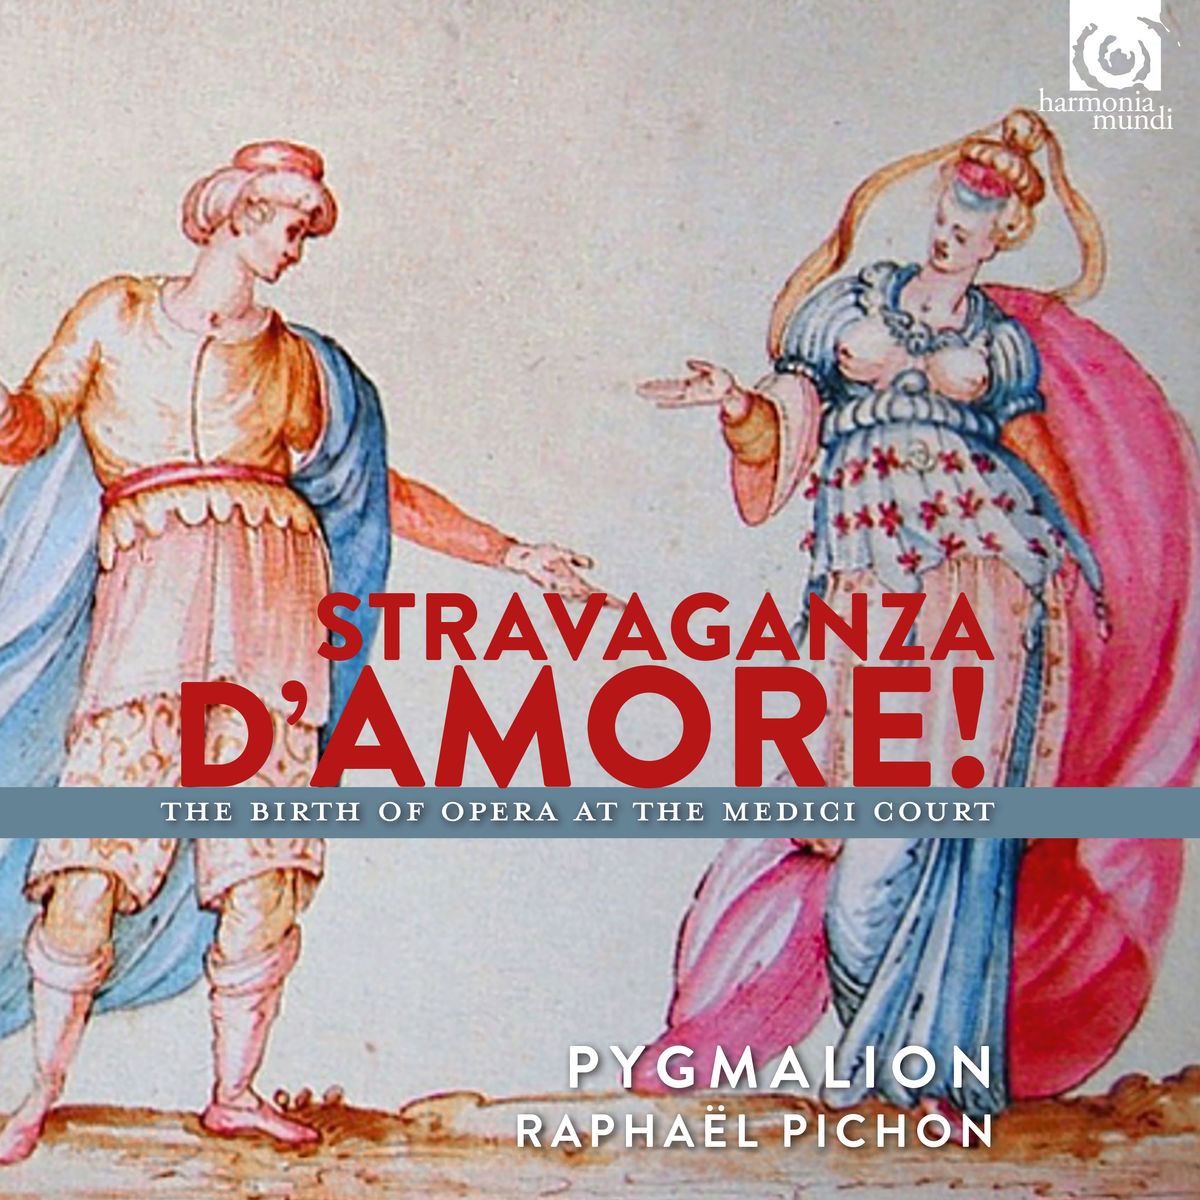 Pygmalion & Raphael Pichon - Stravaganza d’amore! The Birth of Opera at the Medici Court (2017) [Qobuz FLAC 24bit/96kHz]